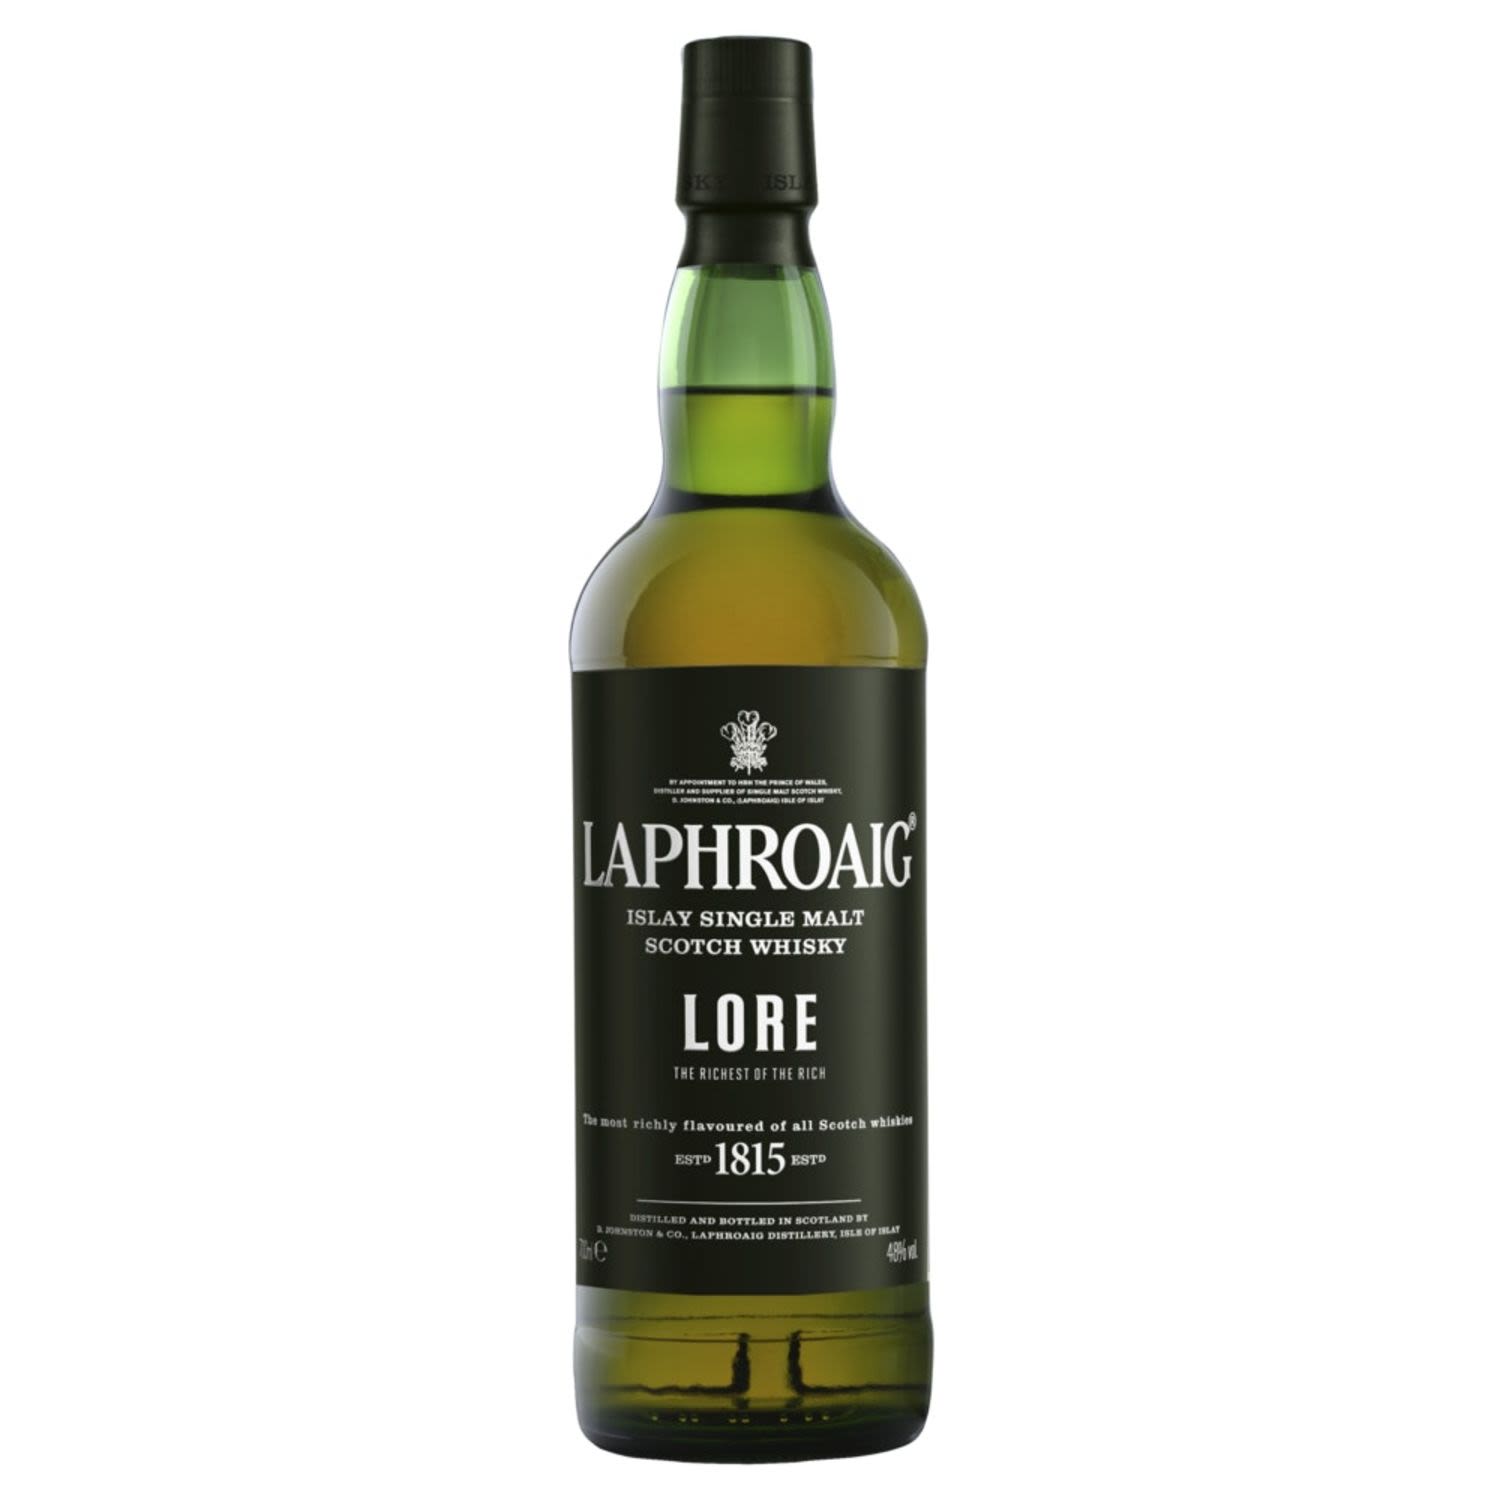 Laphroaig Lore Single Malt Scotch Whisky 700mL Bottle